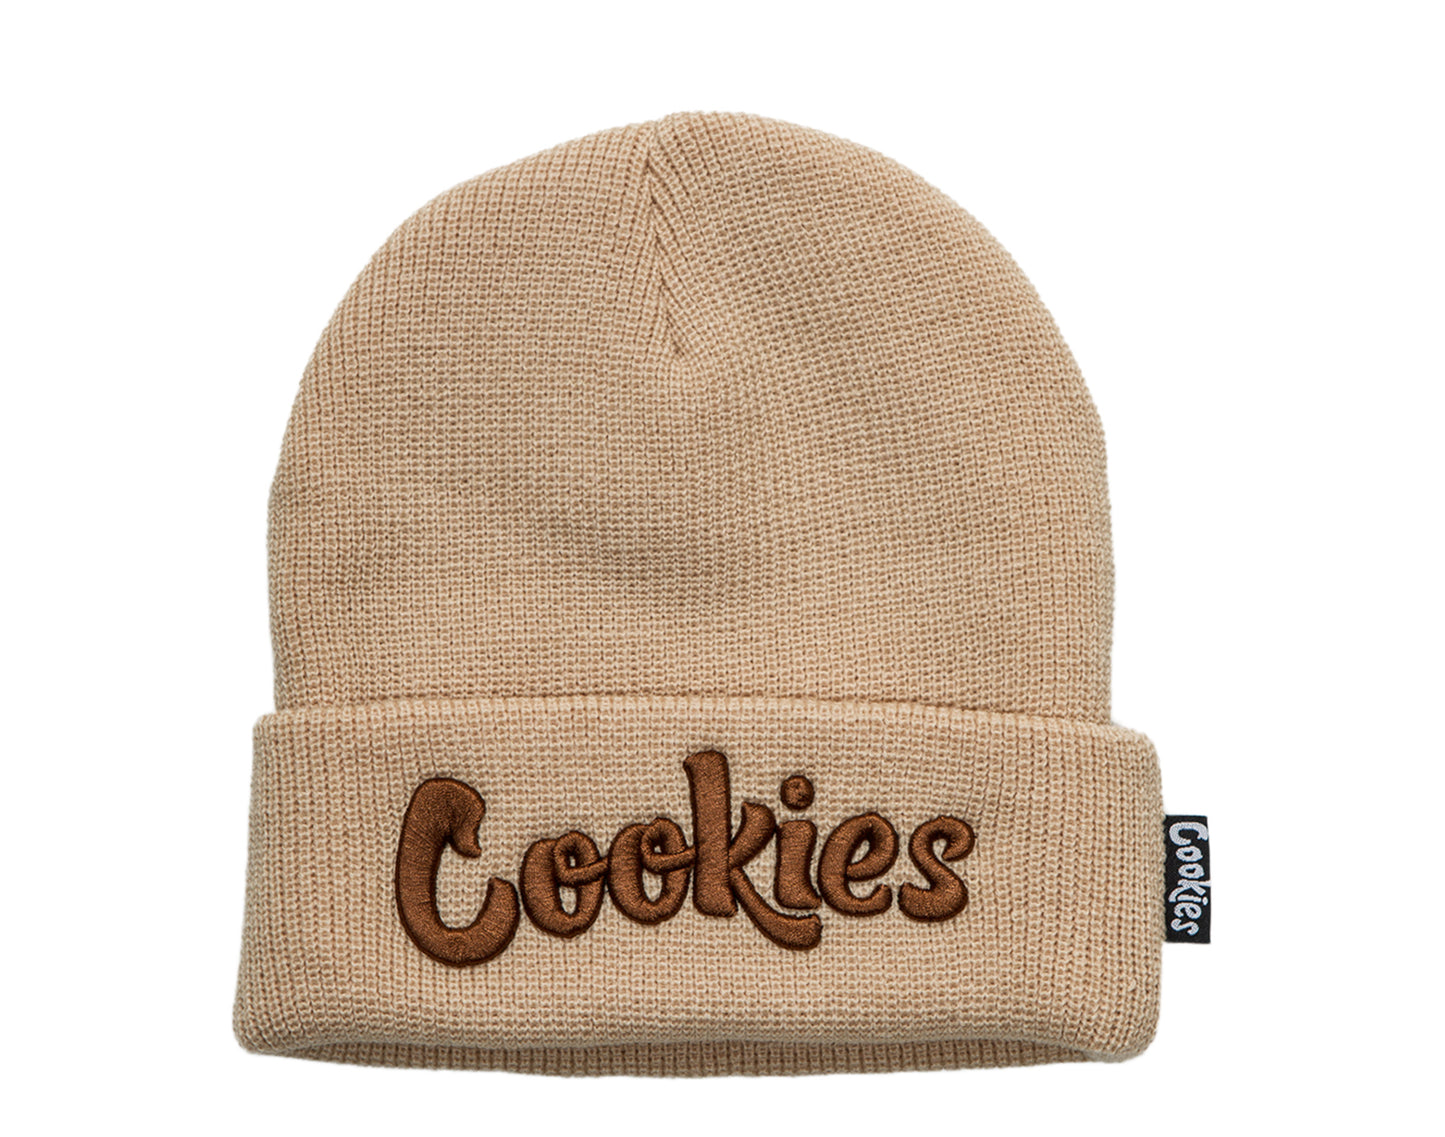 Cookies Original Logo Thin Mint Cream/Brown Knit Beanie Hat 1546X4388-CRB